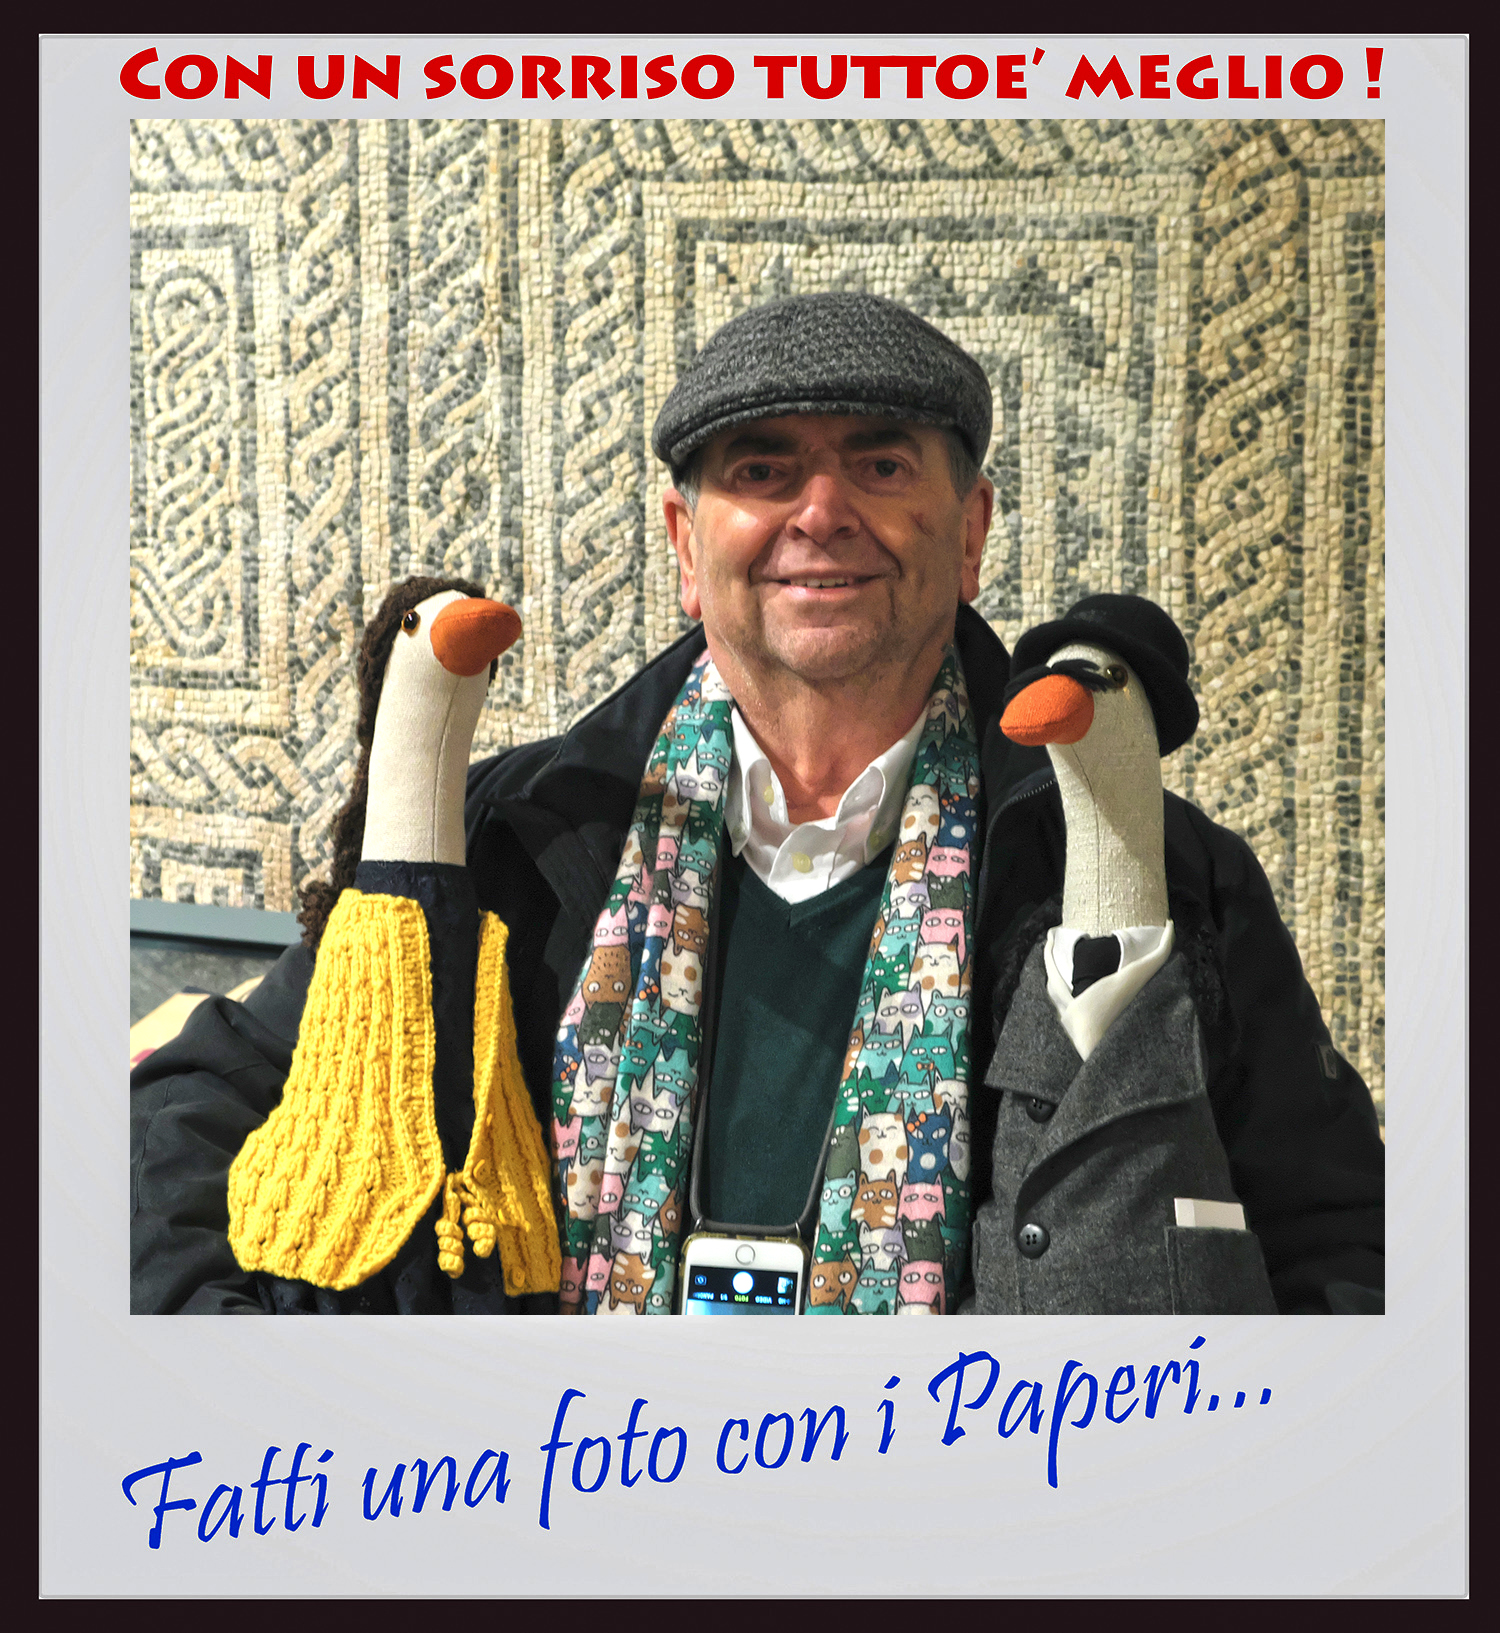 #fattiunafotoconipaperi (with Antonio)...